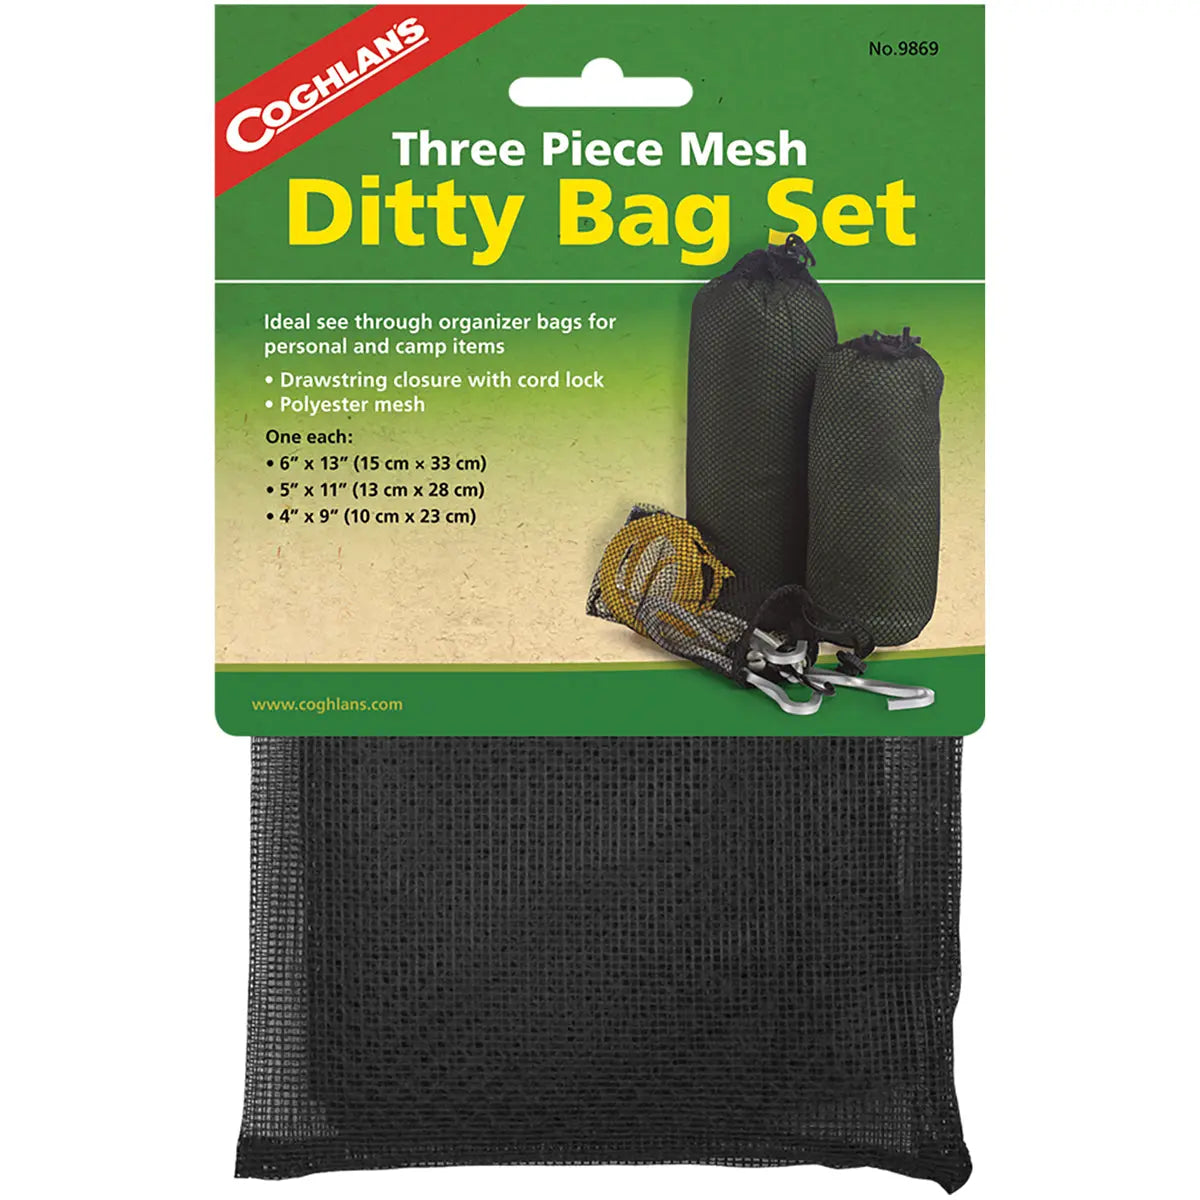 Coghlan's Three Piece Mesh Ditty Bag Set, Drawstring Closure with Cord-Lock Coghlan's